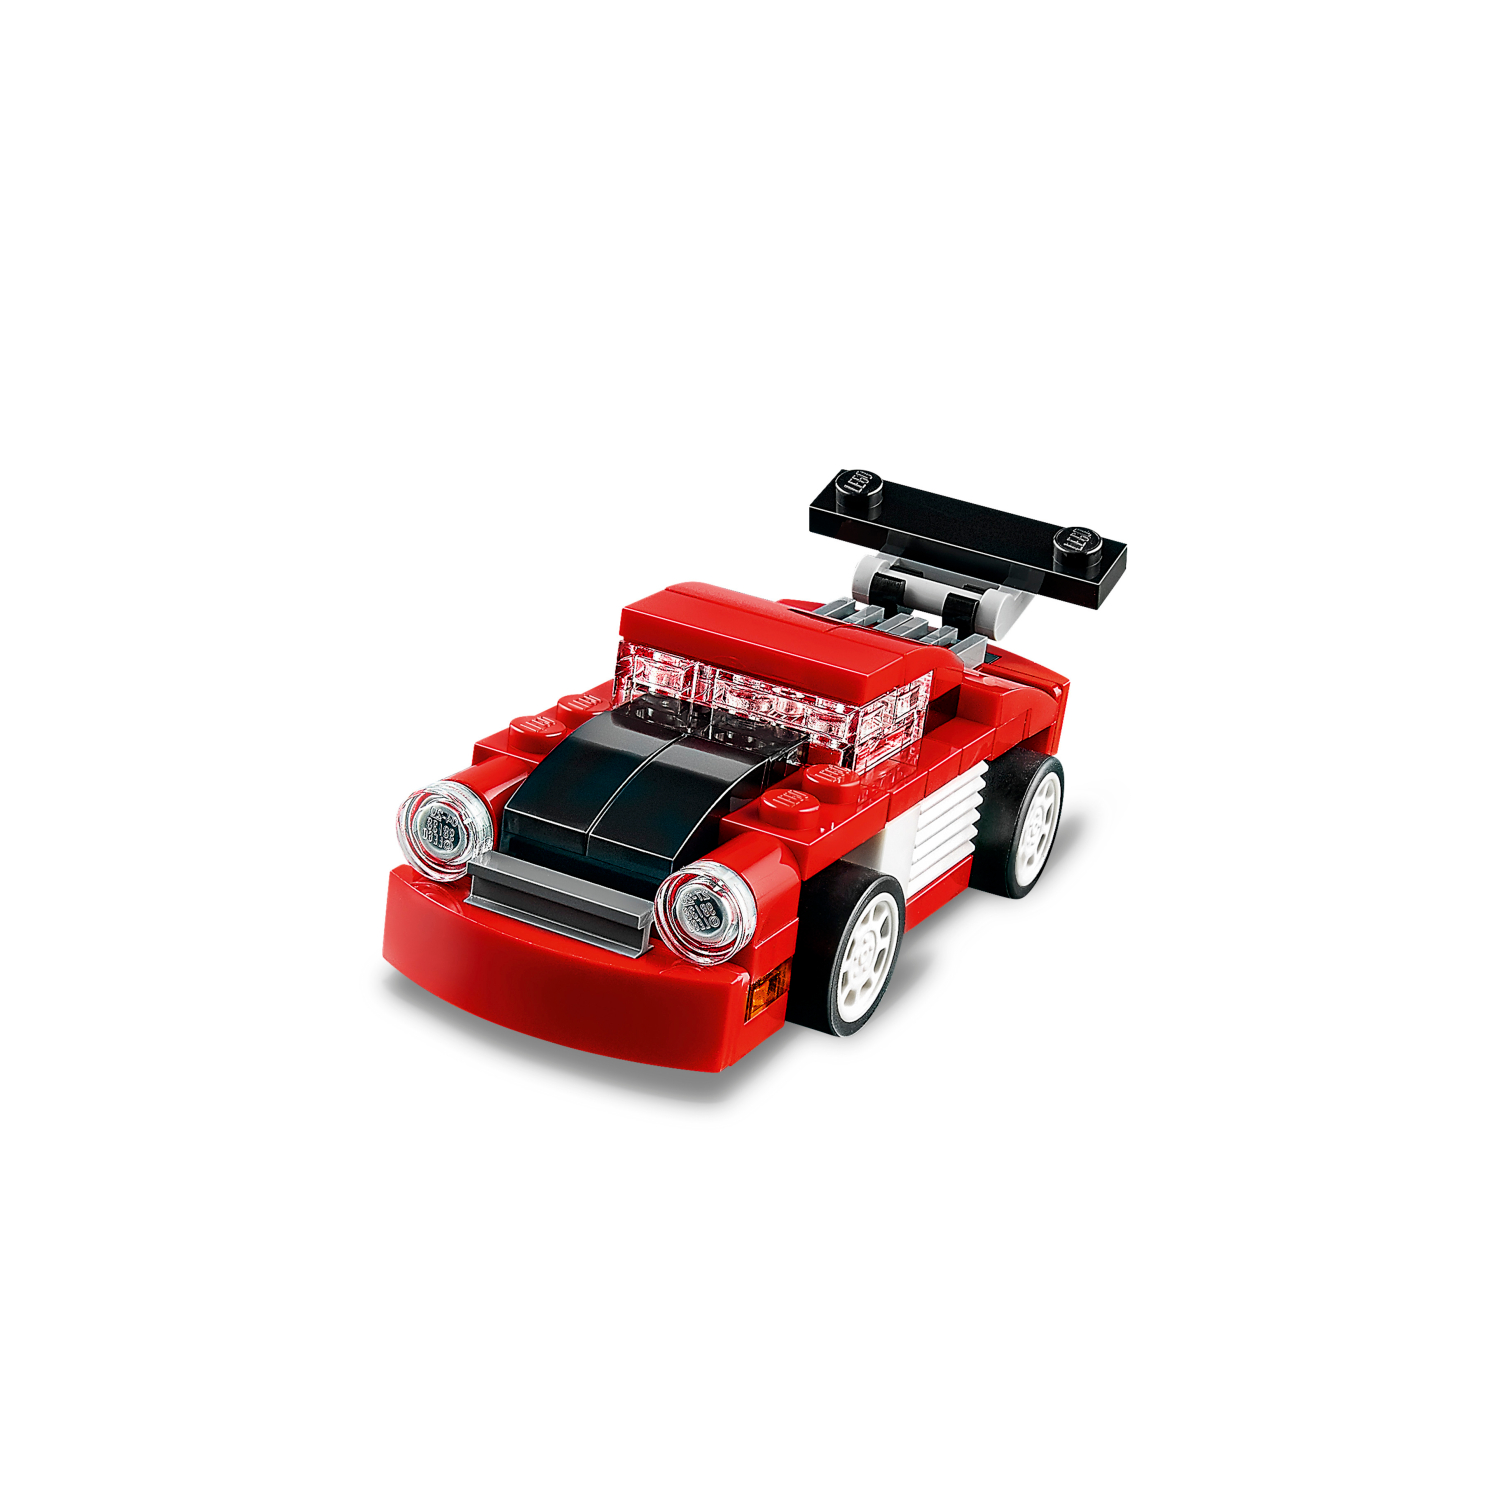 31055 LEGO Creator Crveni trkač